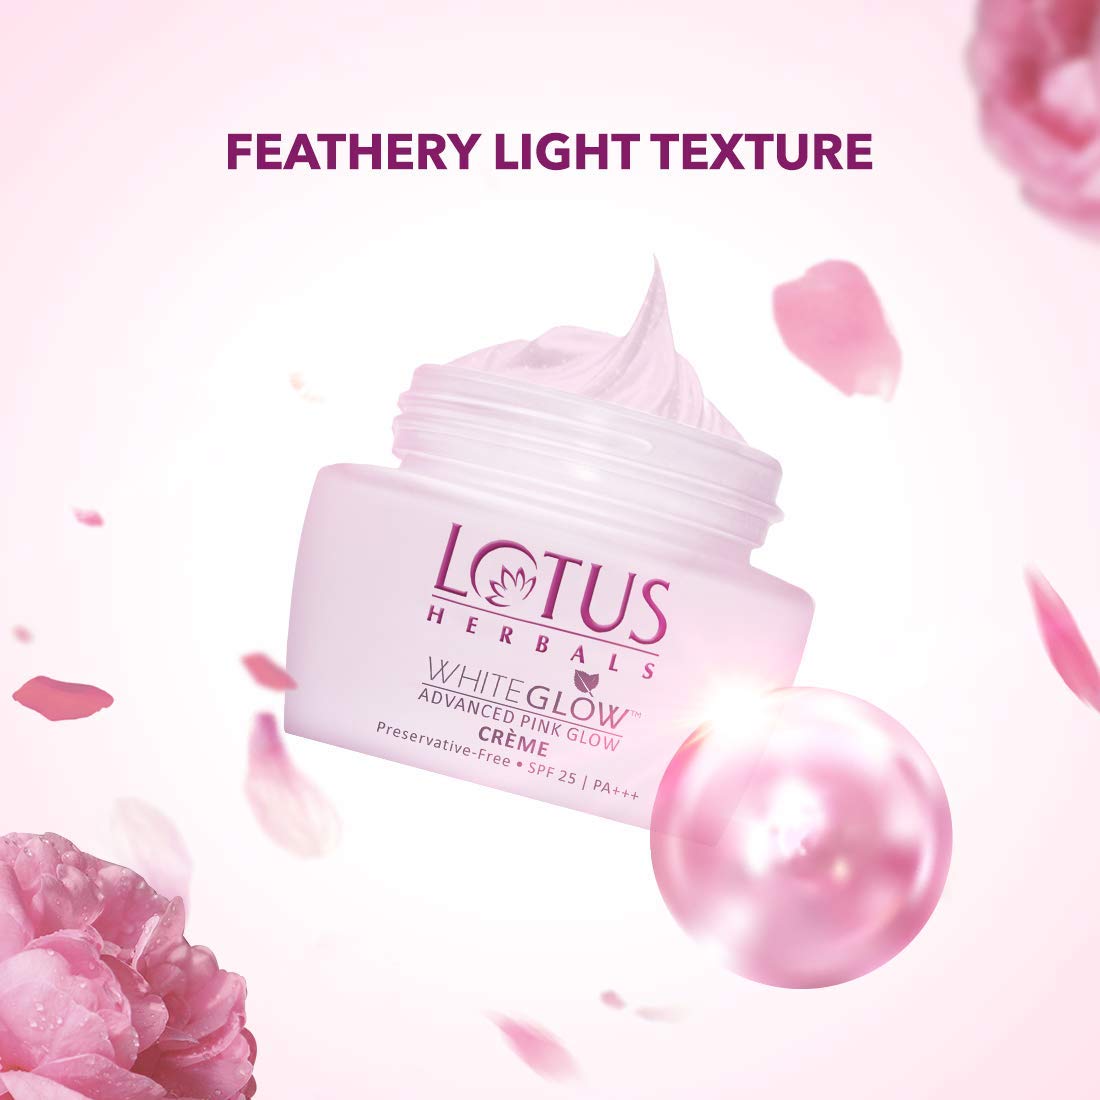 Lotus Herbals Whiteglow Advanced Pink Glow Cream SPF 25 I Pa+++ - 50 grams